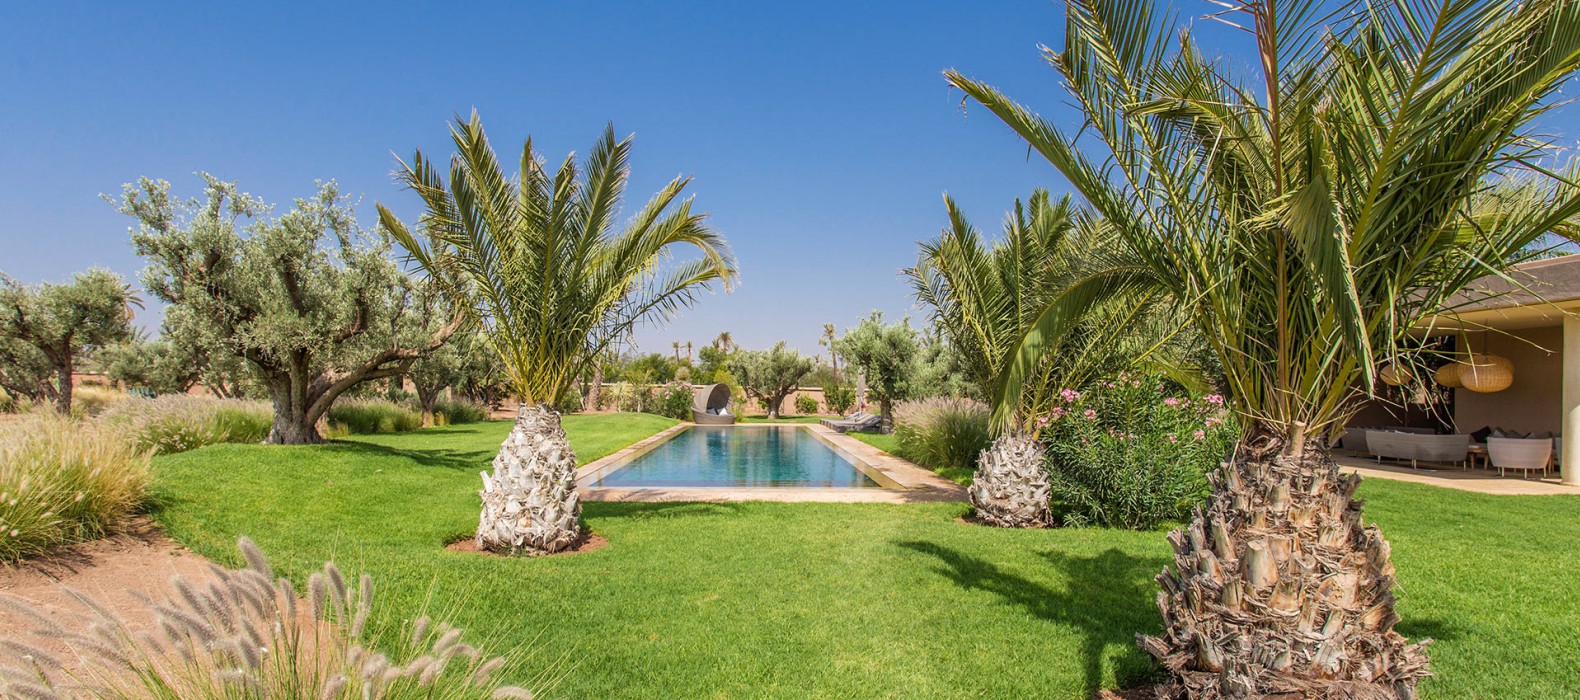 Garden with pool of Villa Oasis in Marrakech